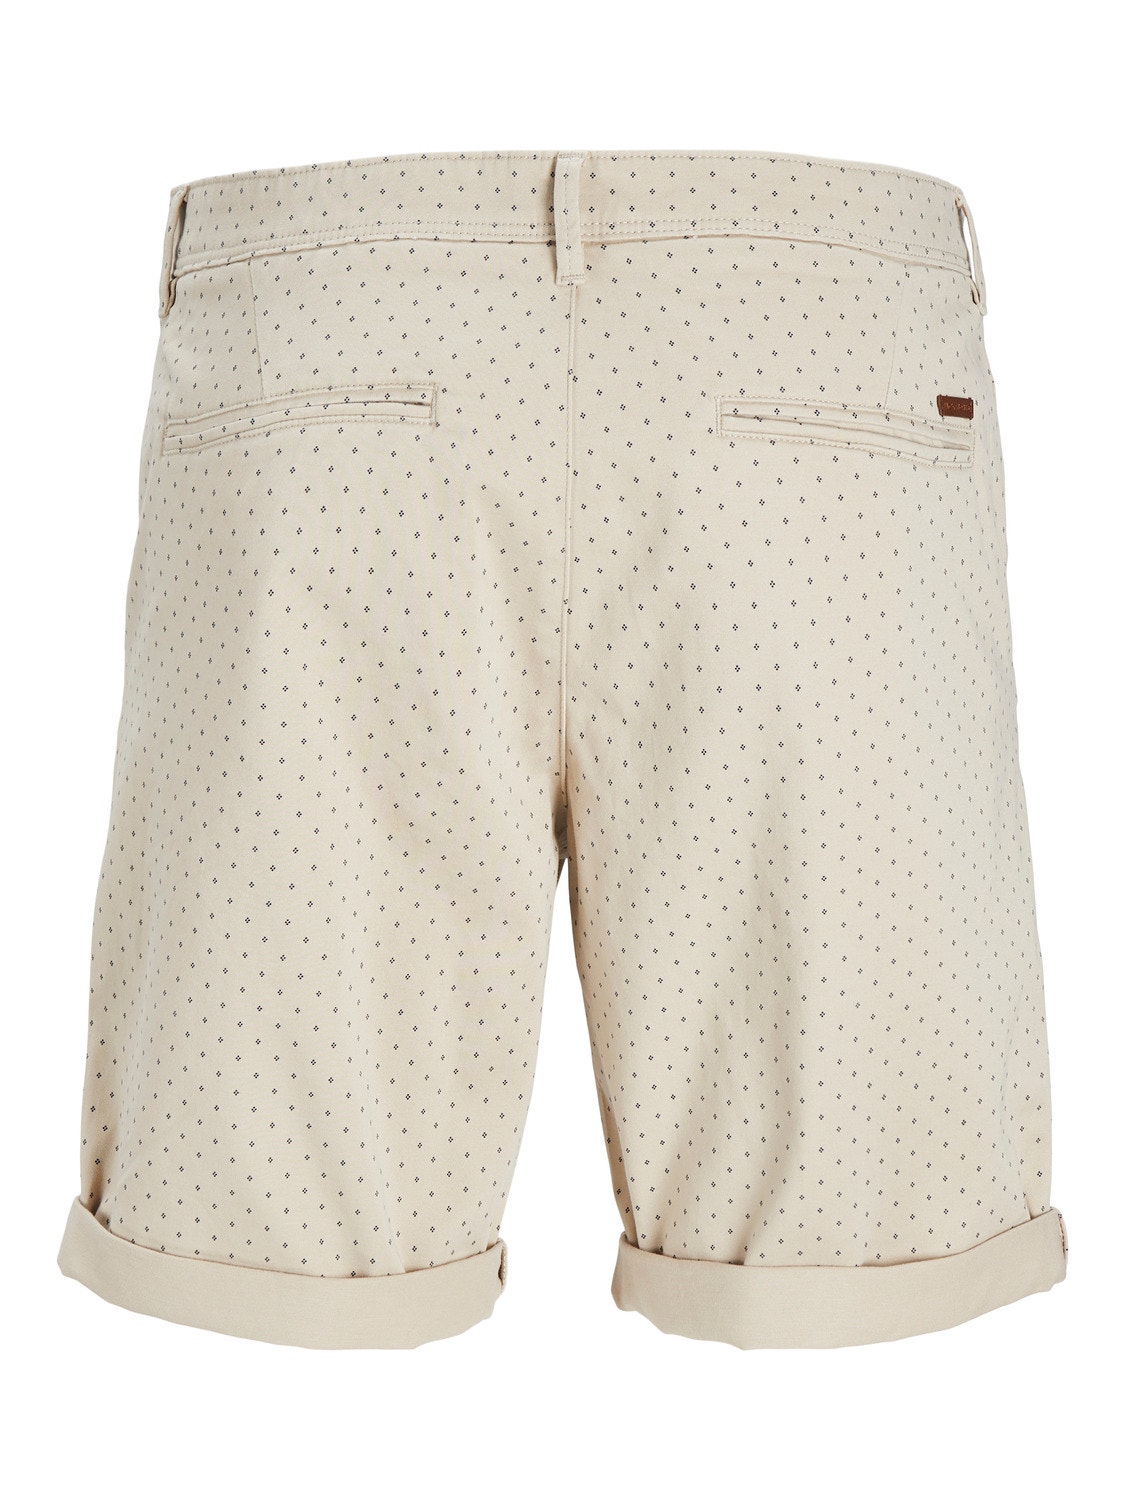 Jack & Jones Regular Fit Chino shorts -Oxford Tan - 12230336